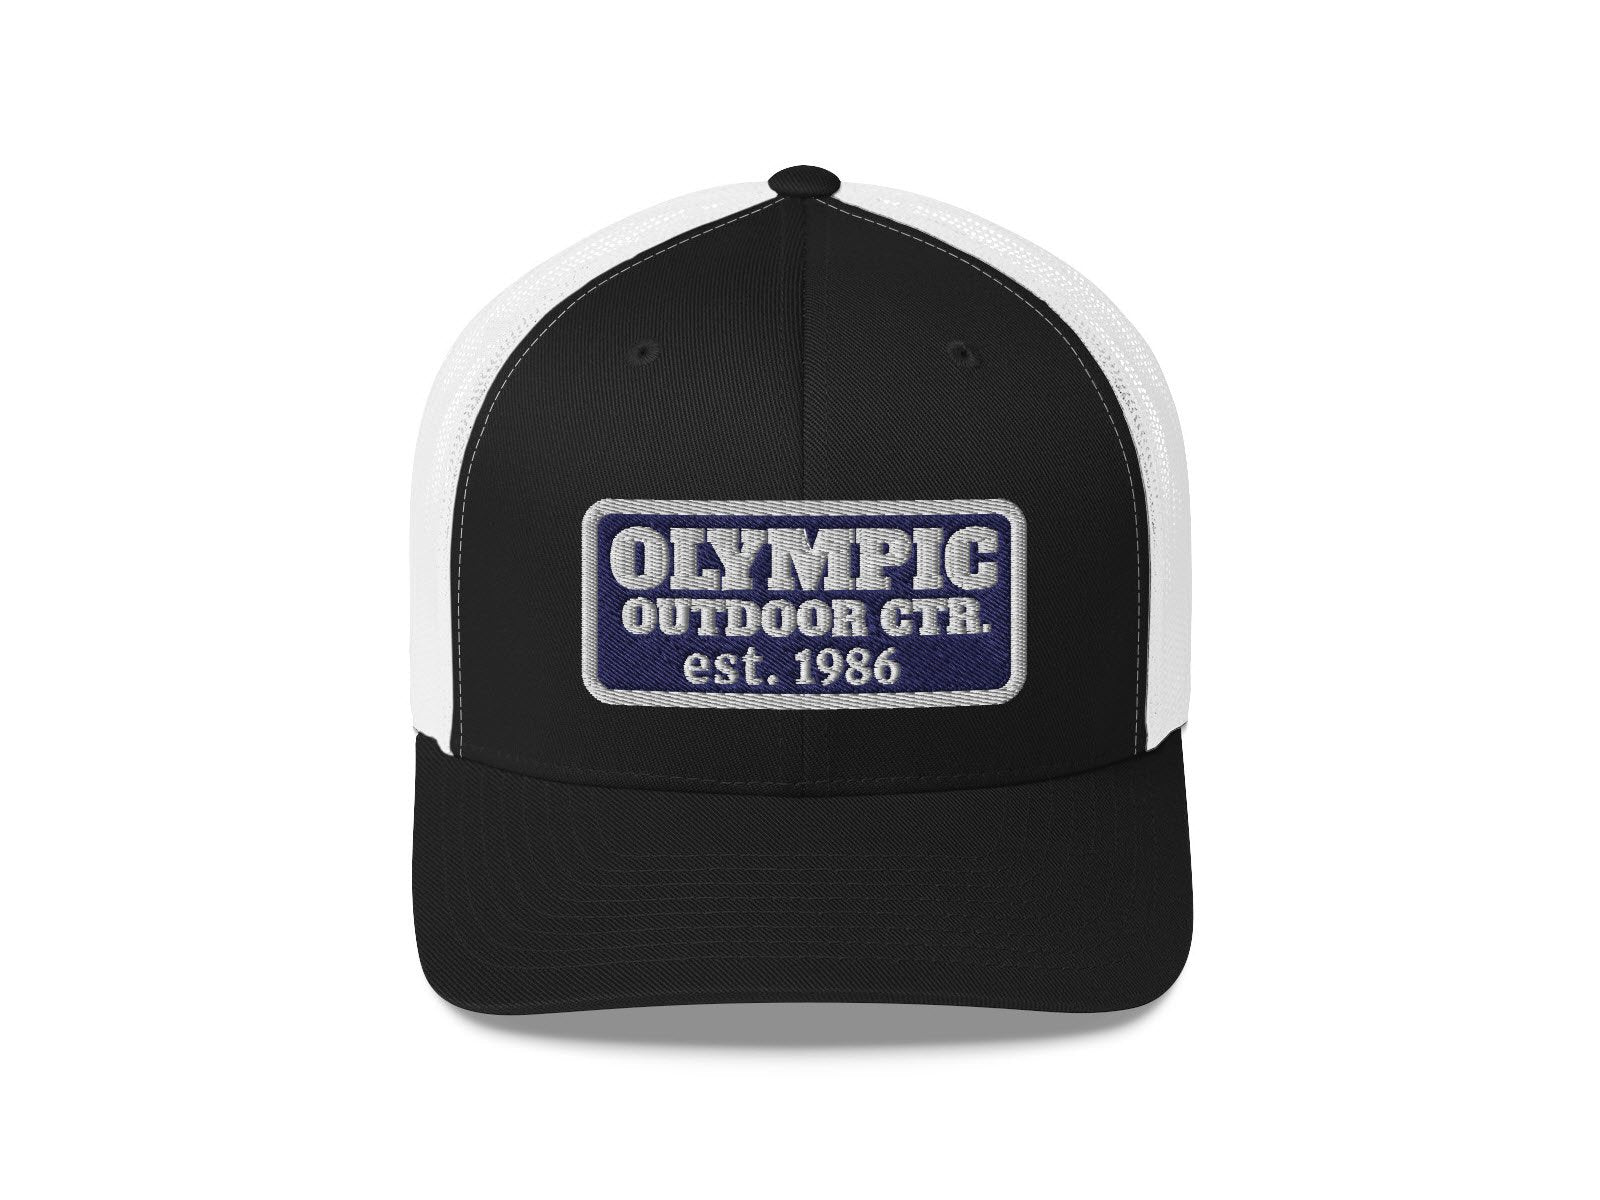 Olympic Outdoor Center Retro Trucker Cap in Black